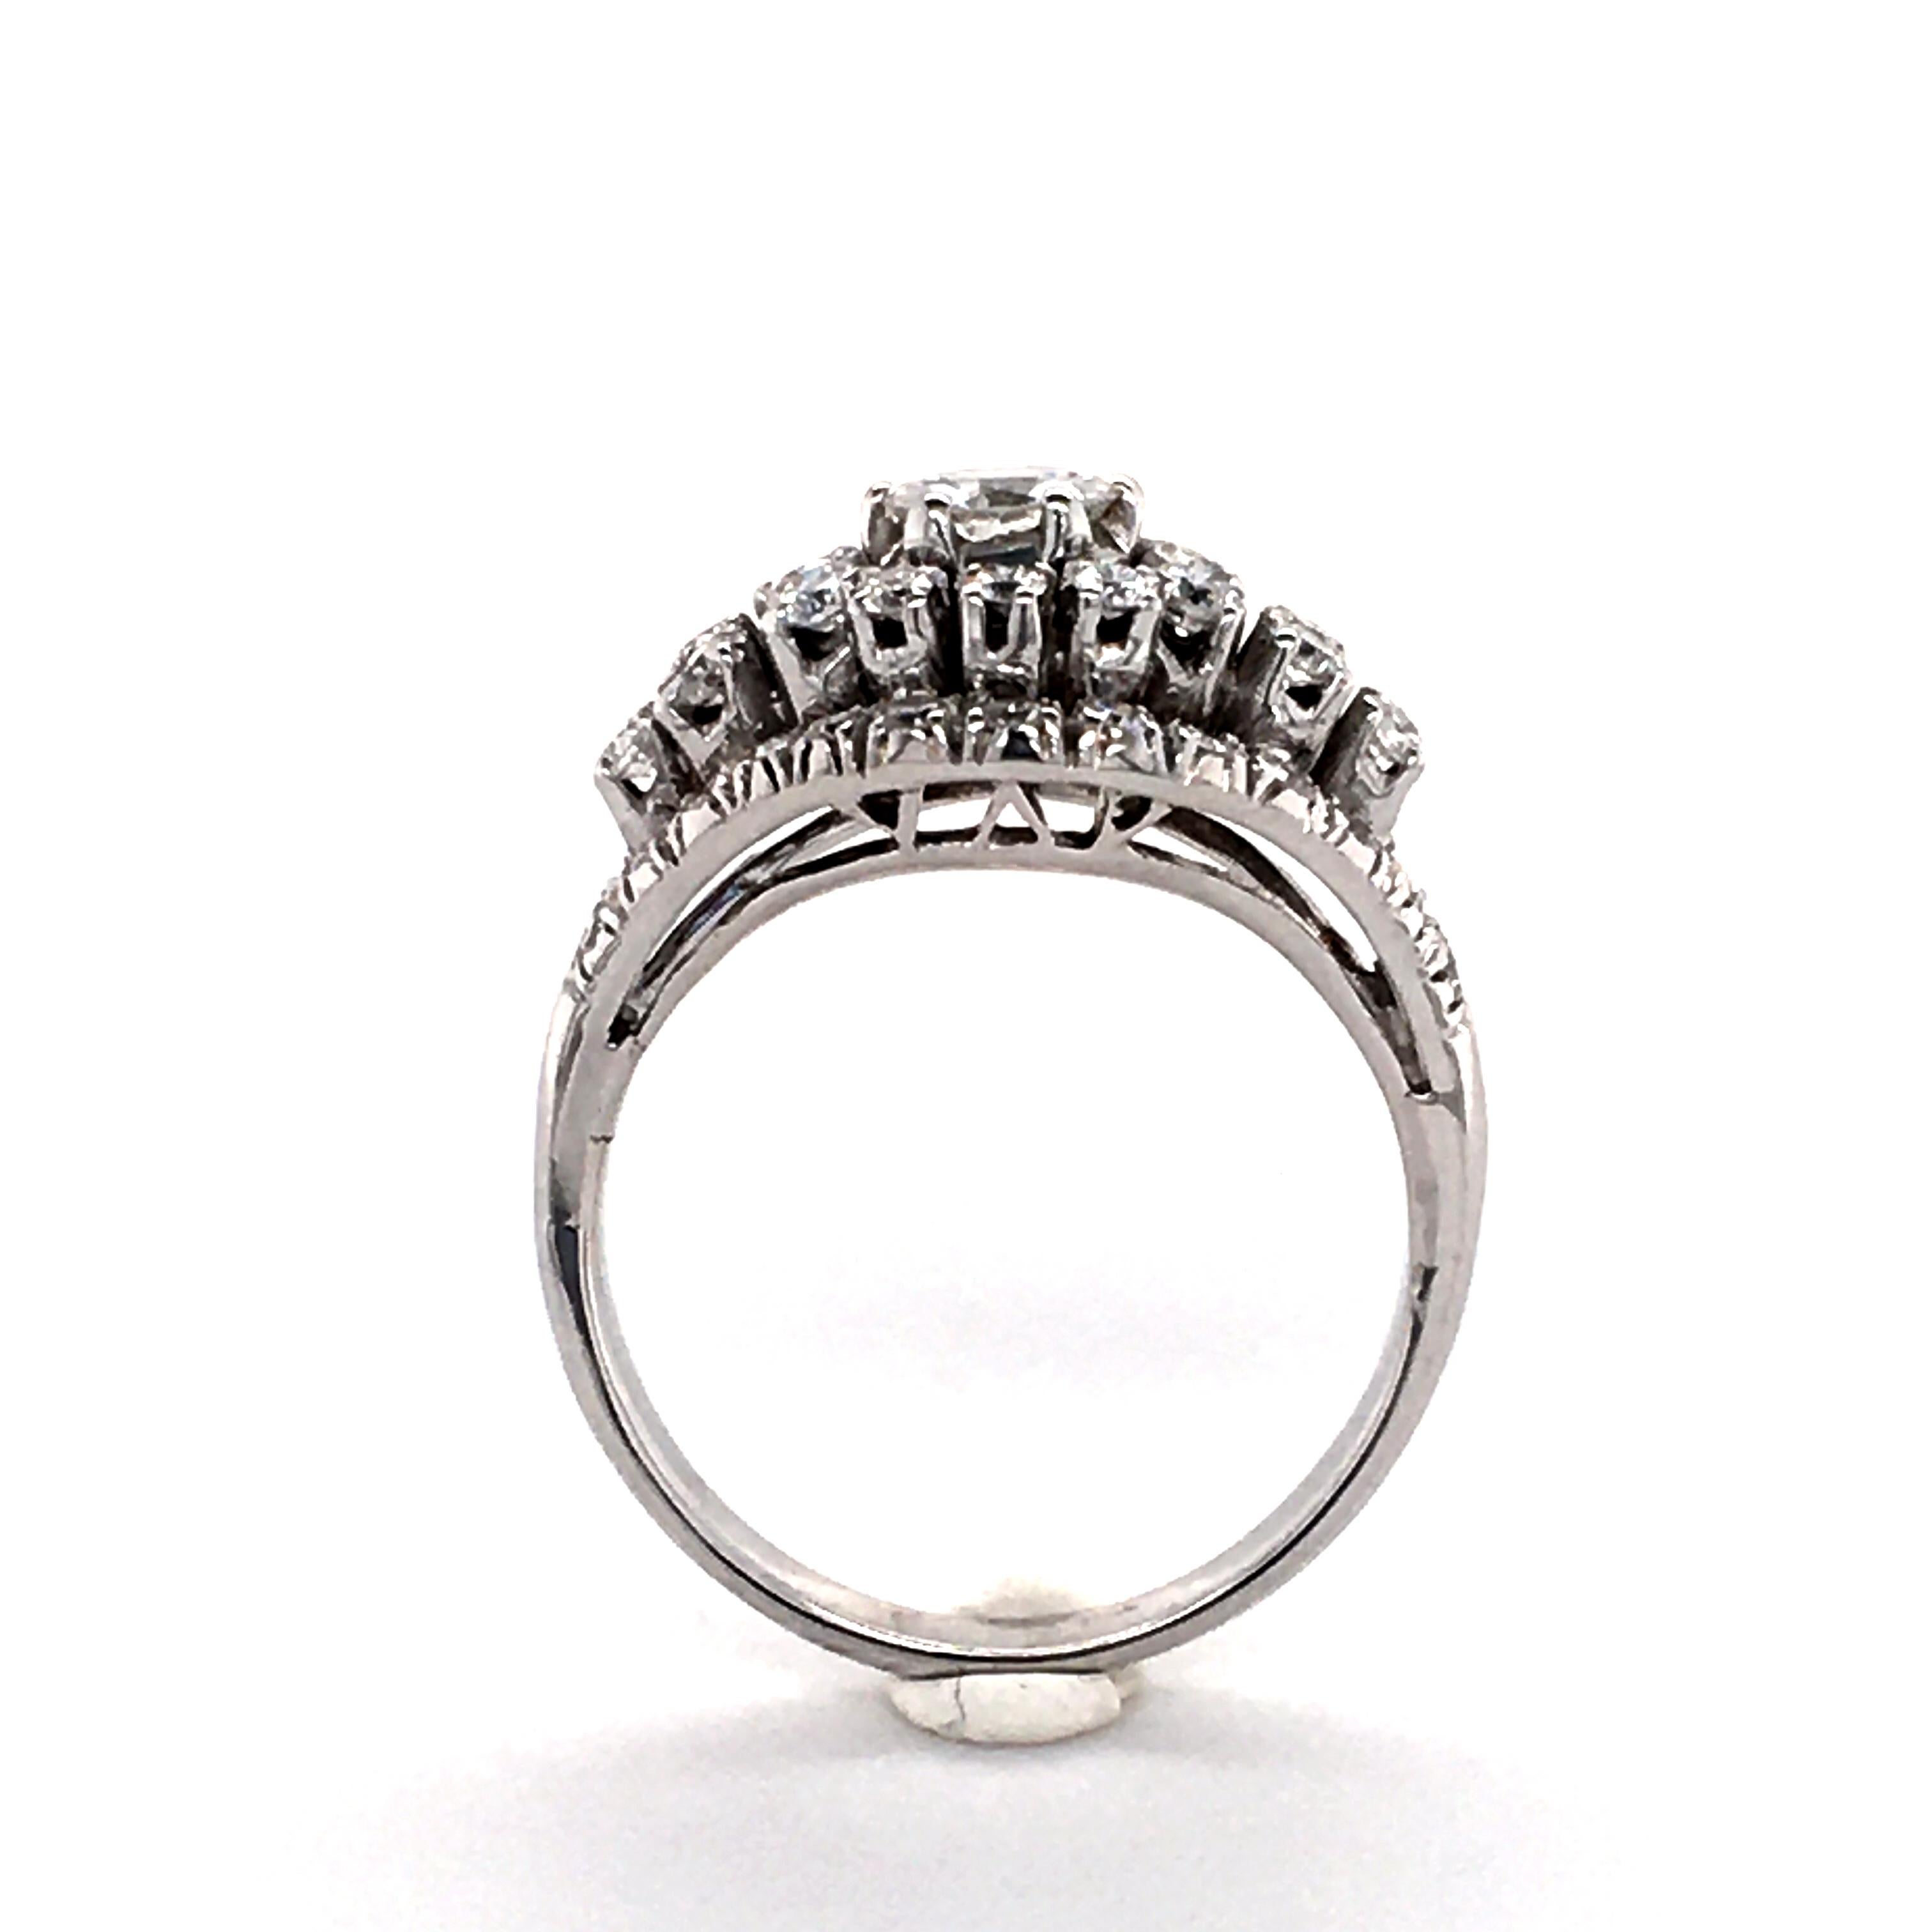 Brilliant Cut Decorative Diamond Ring in 18 Karat White Gold by Bucherer